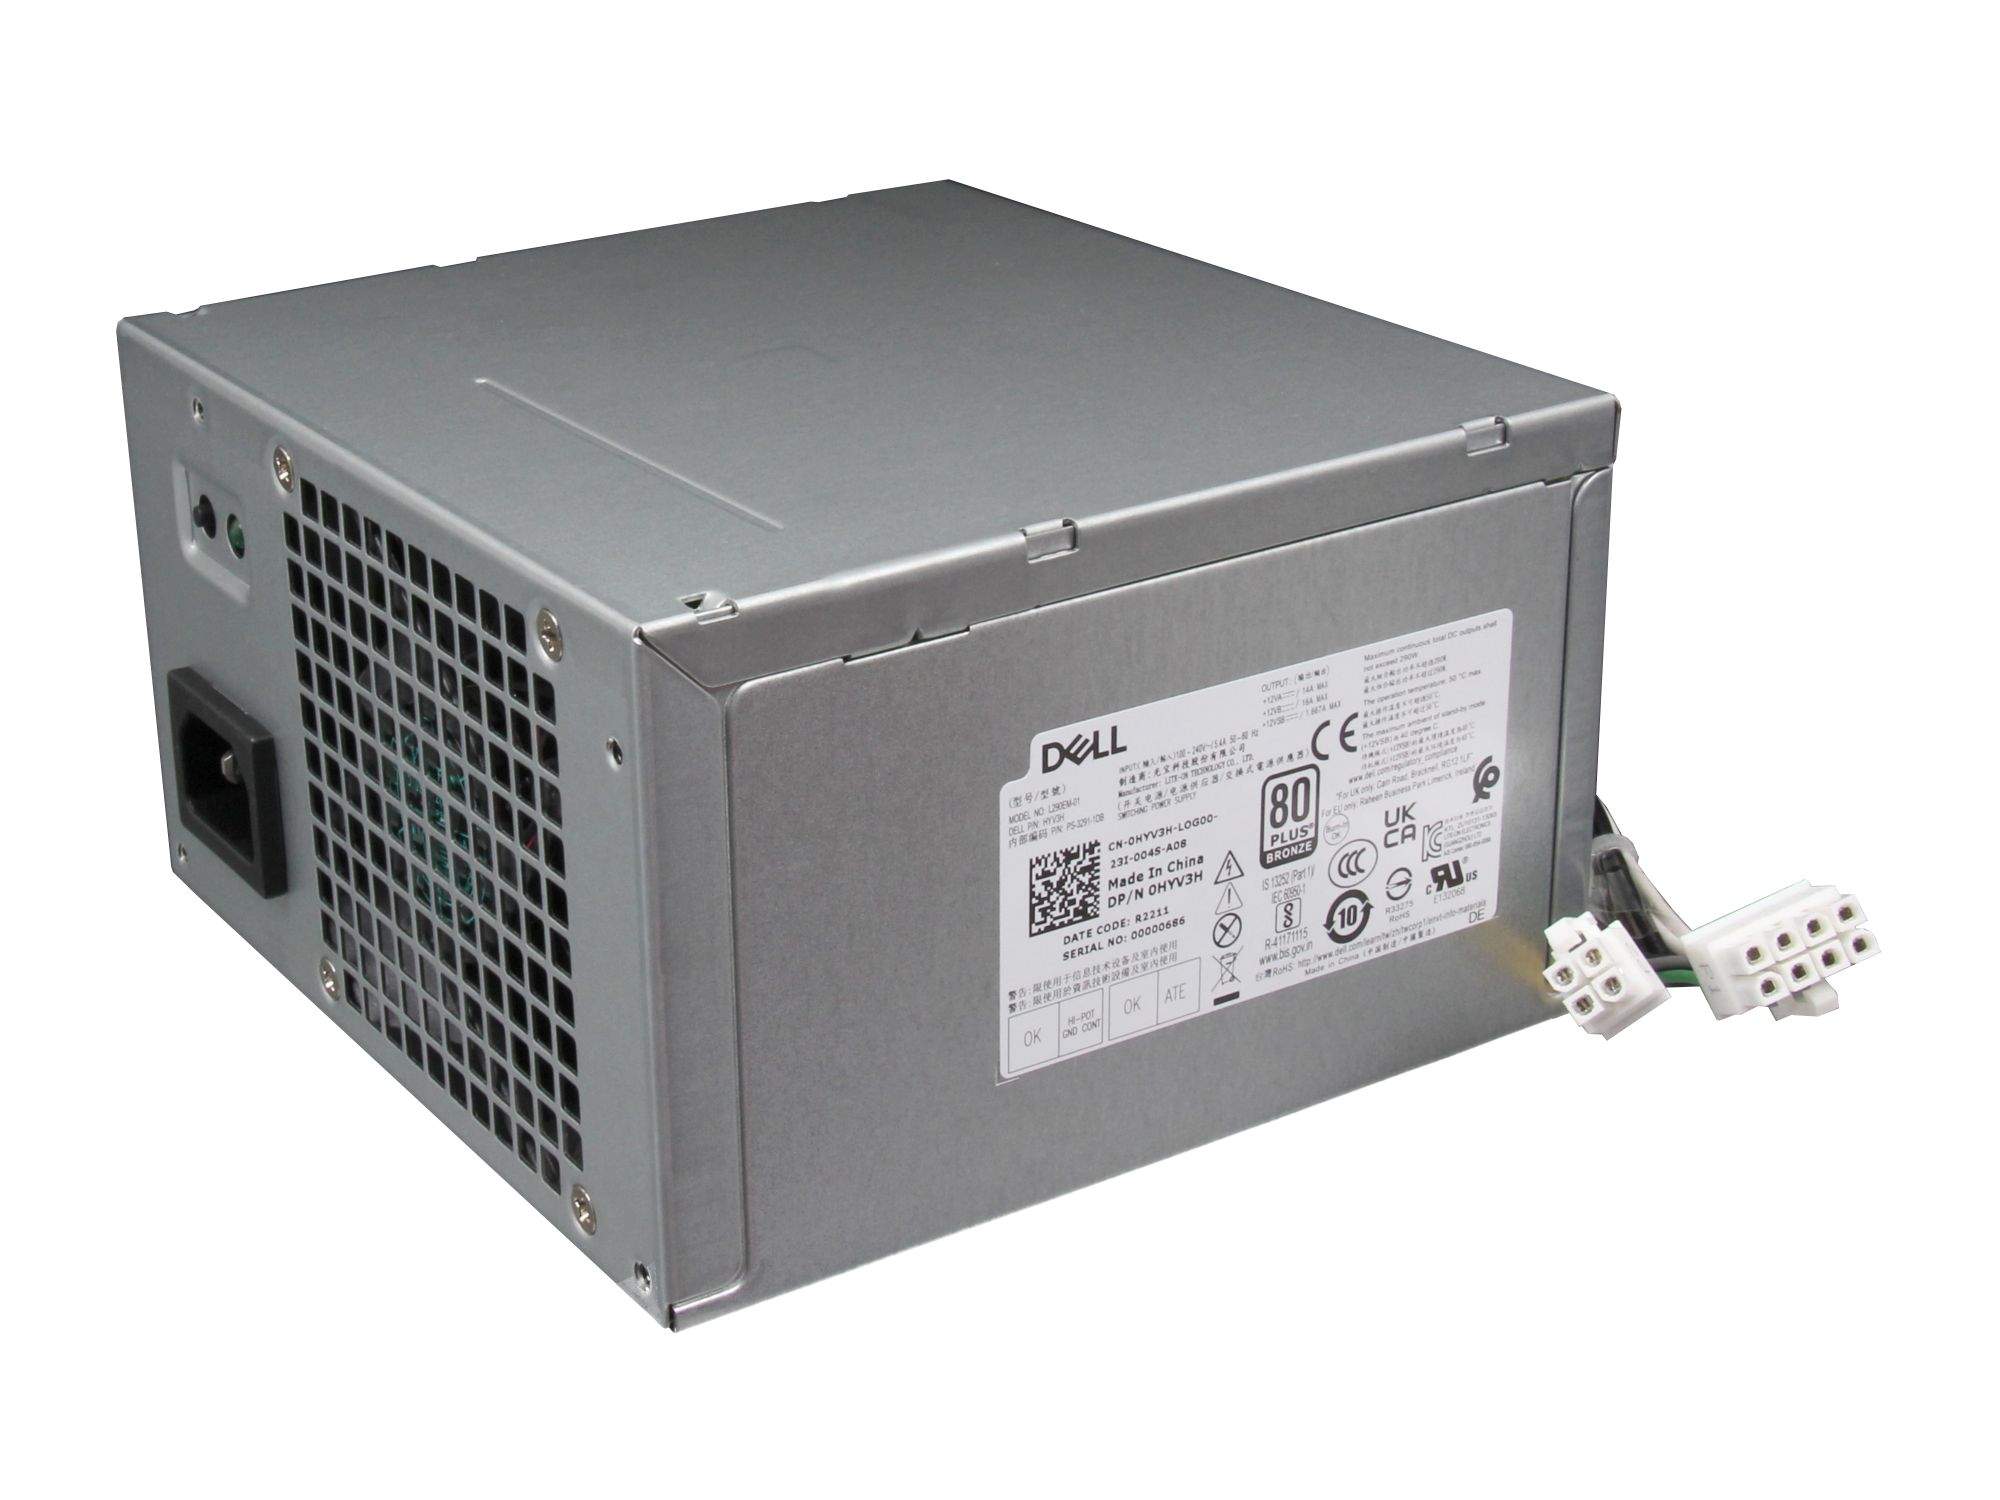 DELL PS-3291-1DB Desktop-PC Netzteil 290 Watt